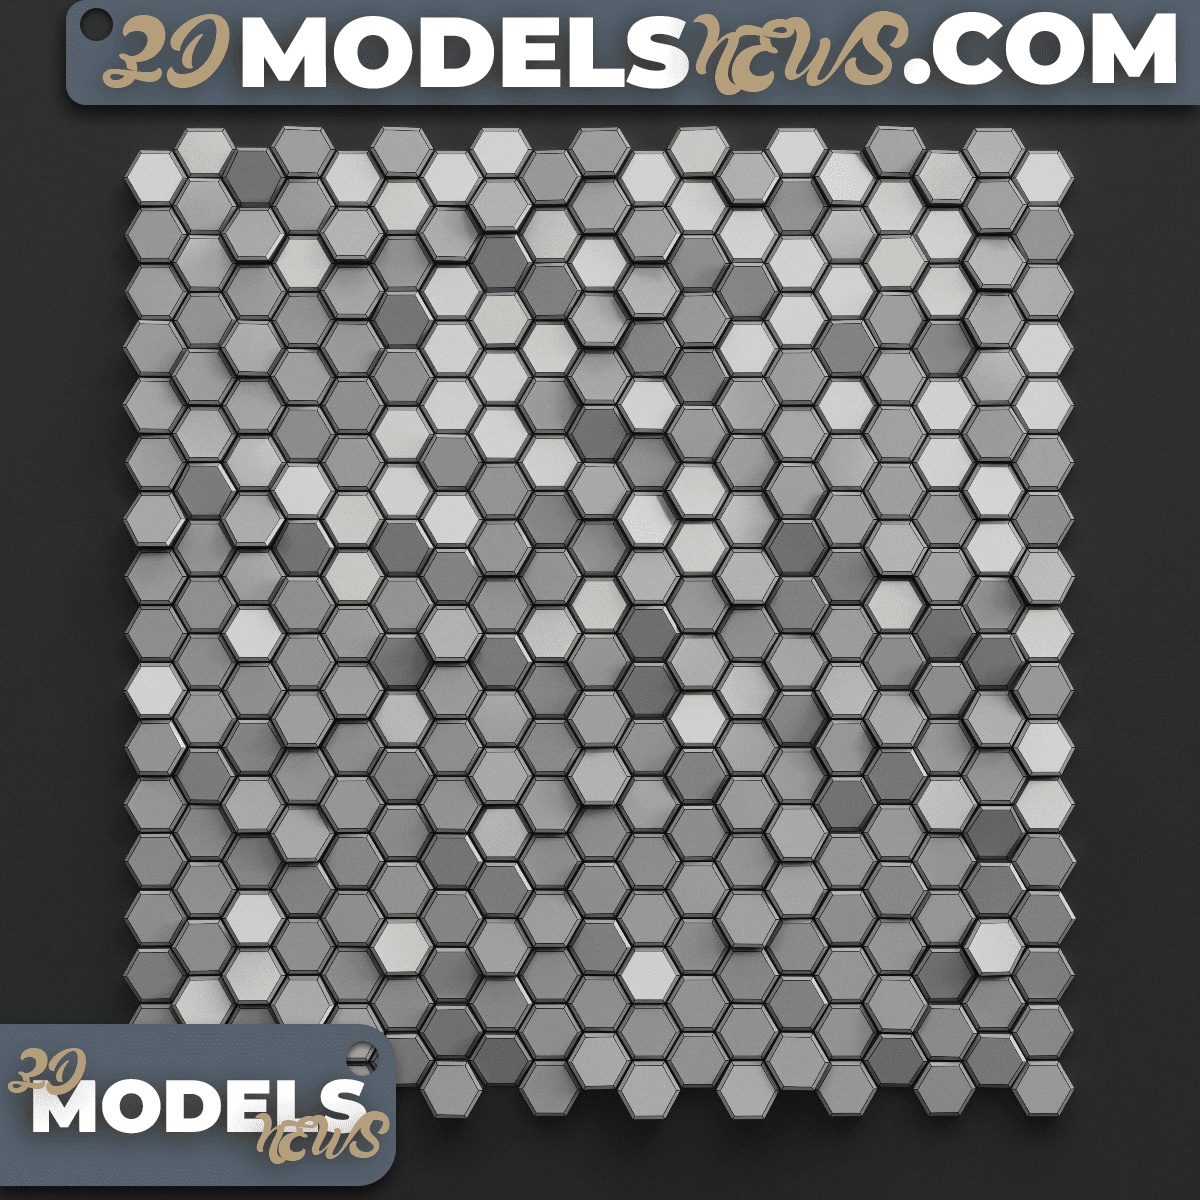 Mosaic Gravity Model 3